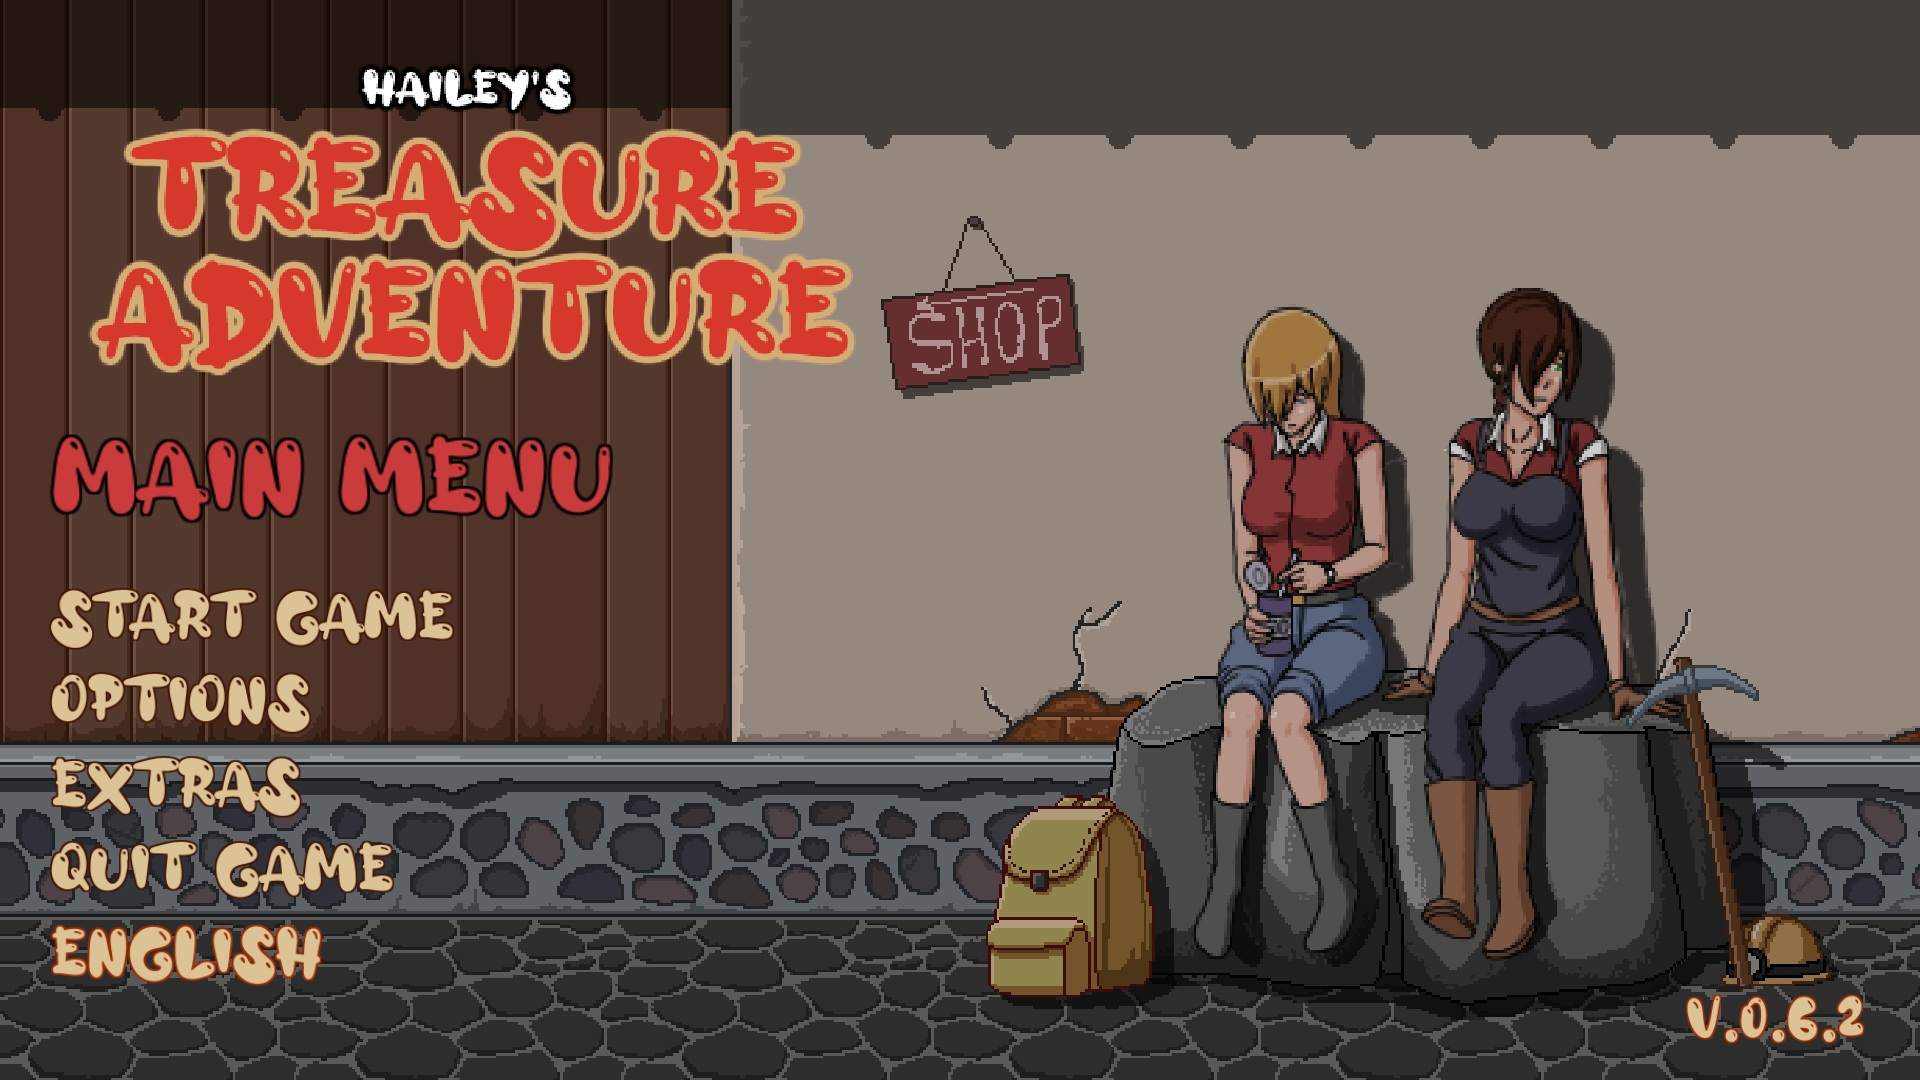 Haileys' Treasure Adventure â€“ New Version 0.6.2 - Adult Games Collector